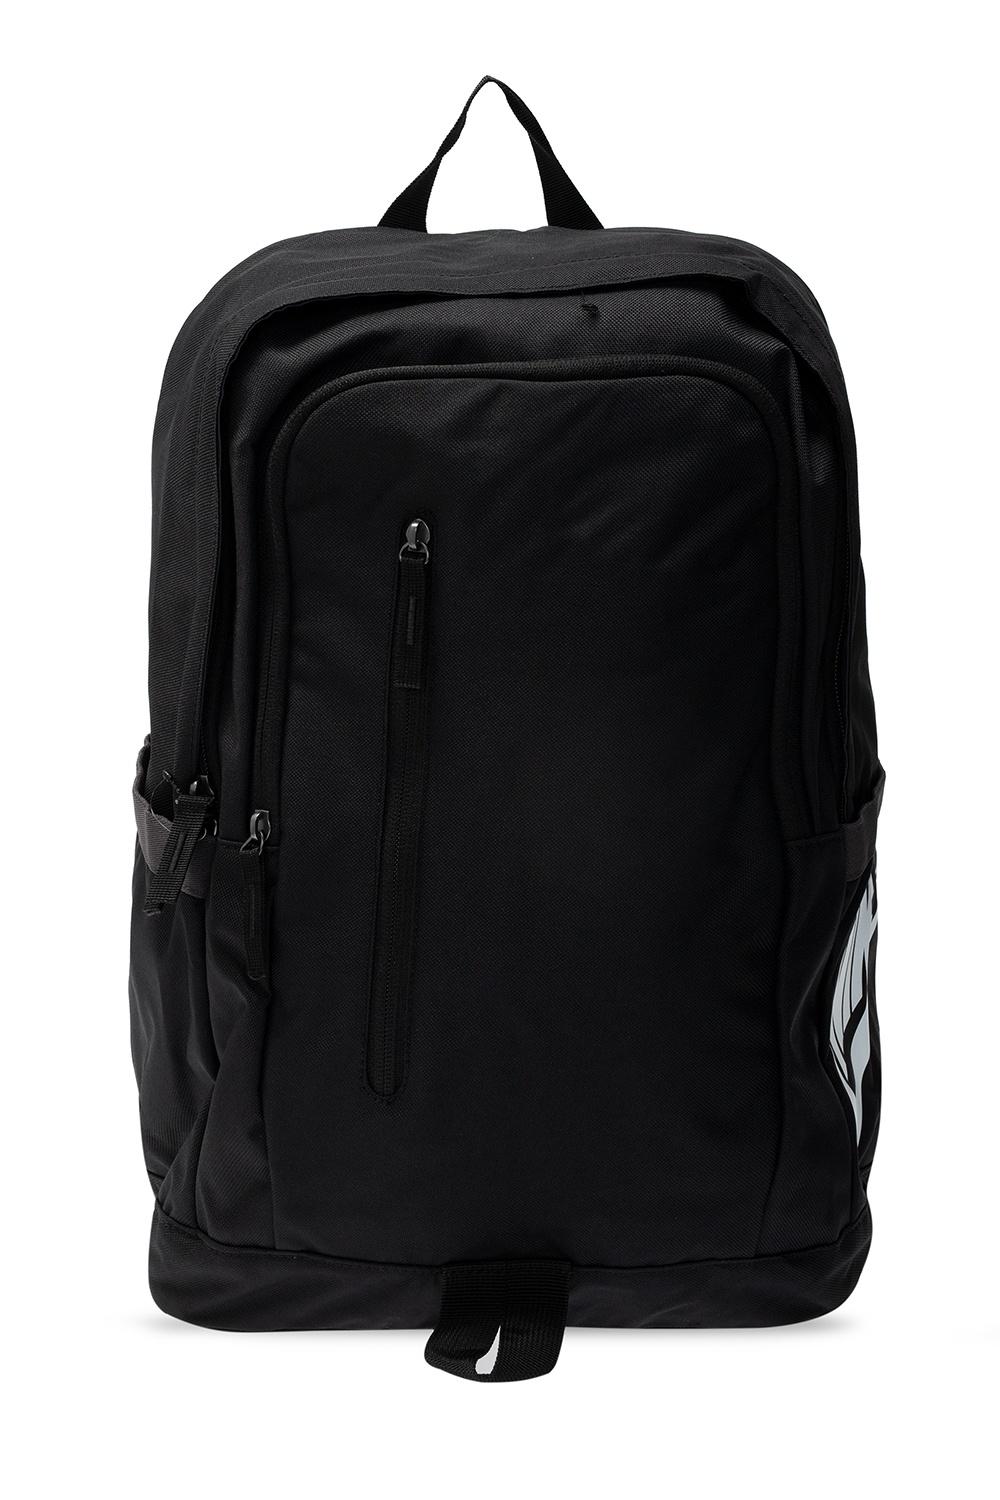 Nike Access Soleday Backpack Black Lyst